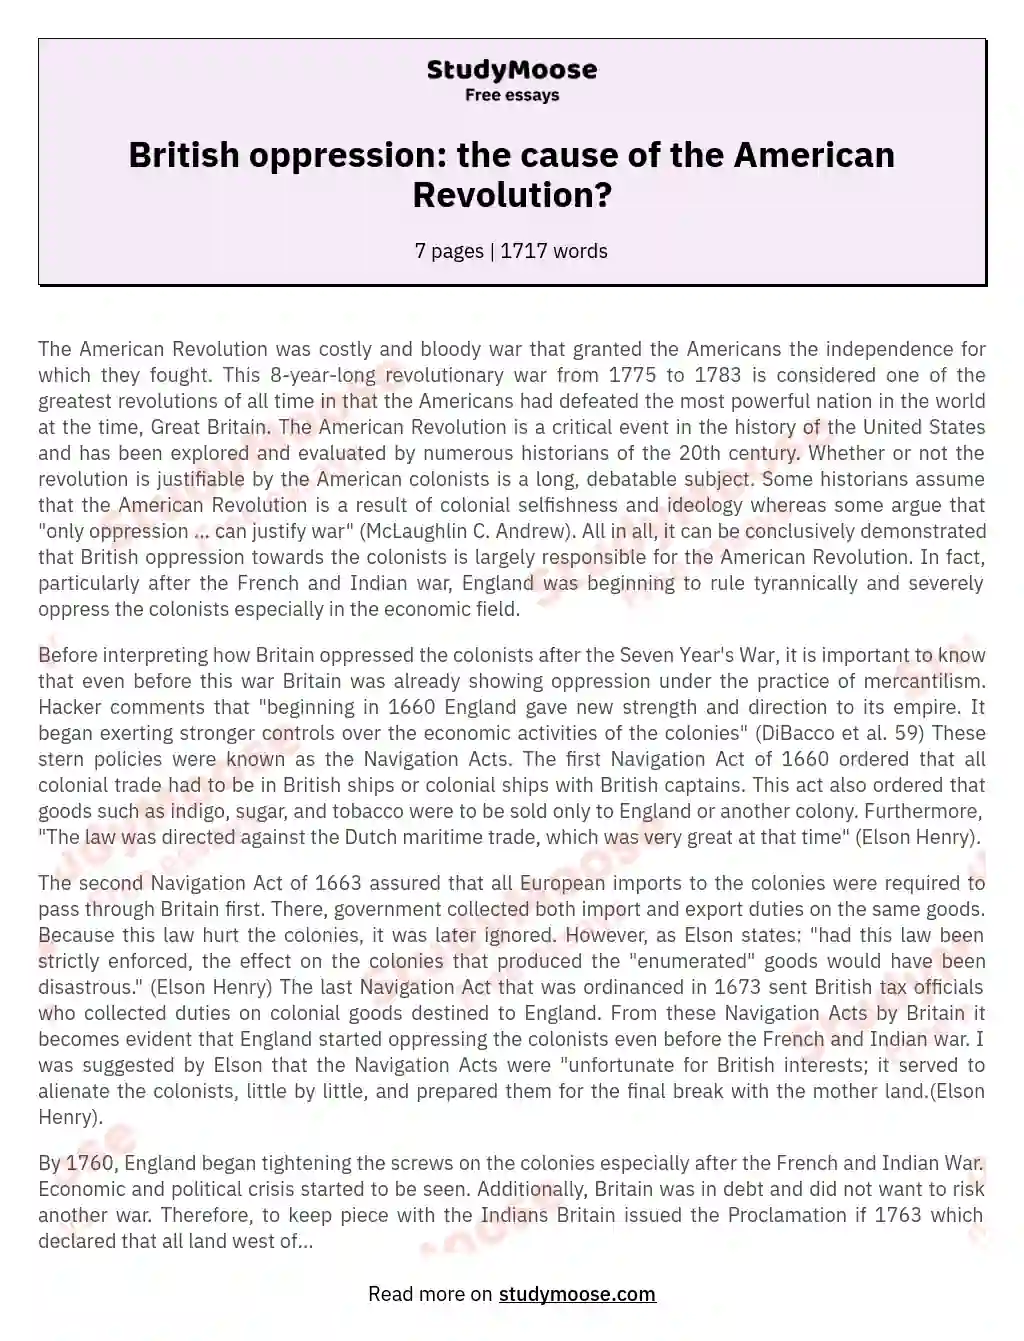 British oppression: the cause of the American Revolution? essay